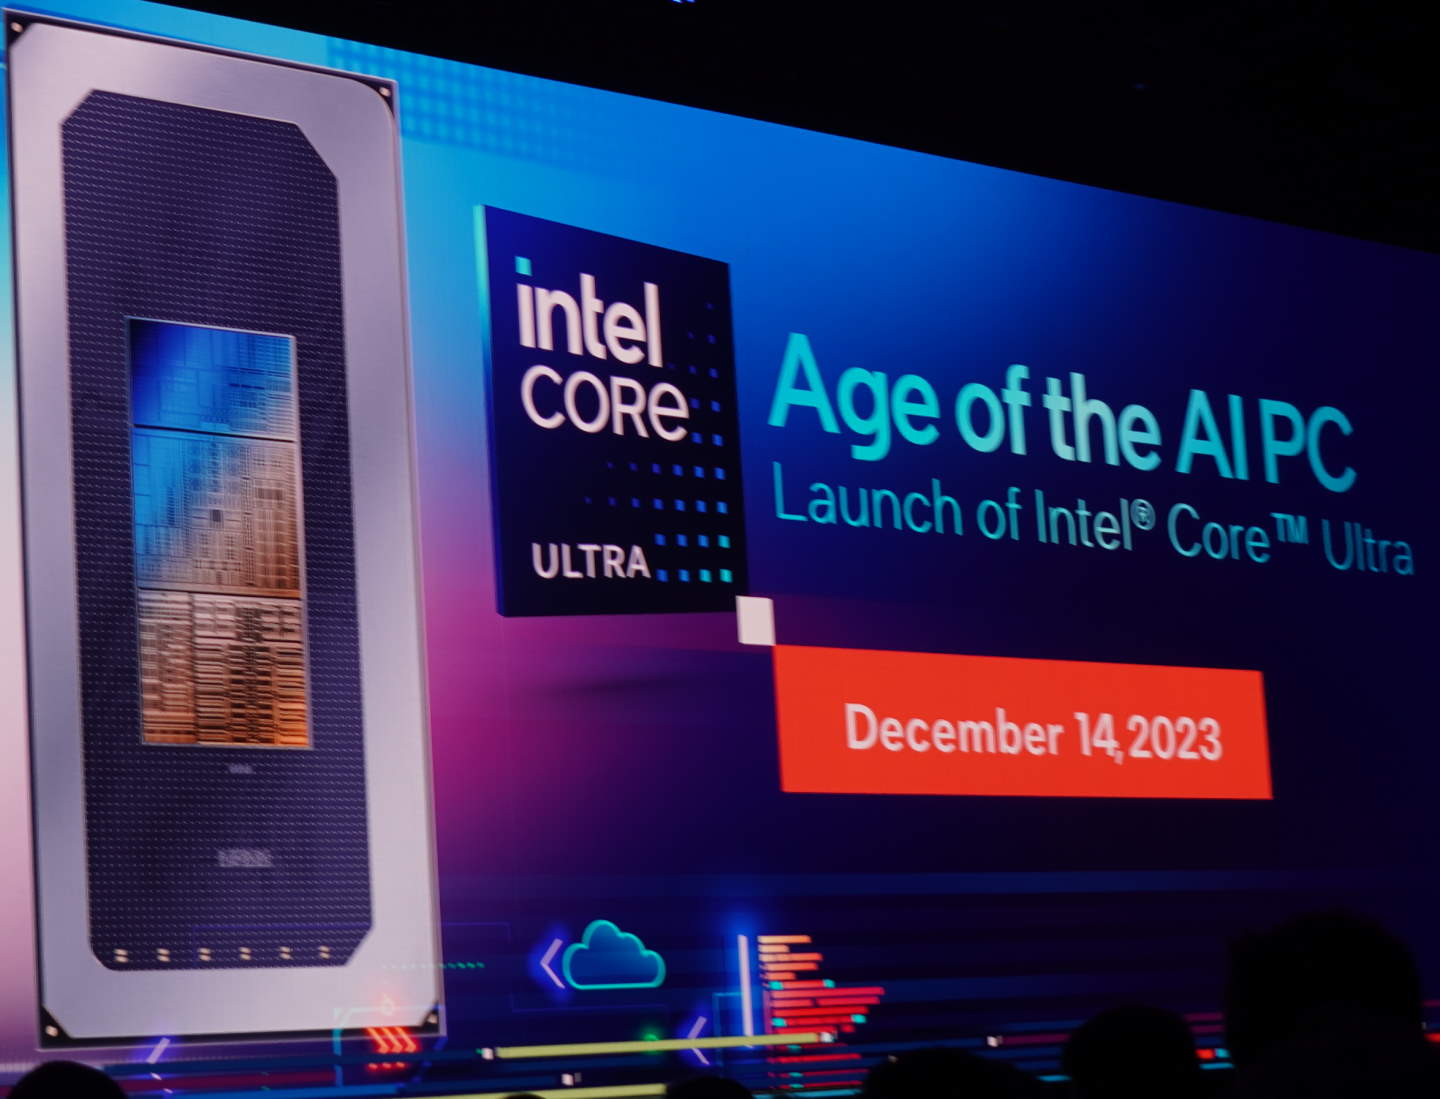  Meteor Lake的產品名稱為Core Ultra處理器，於2023年12月14日正式推出。